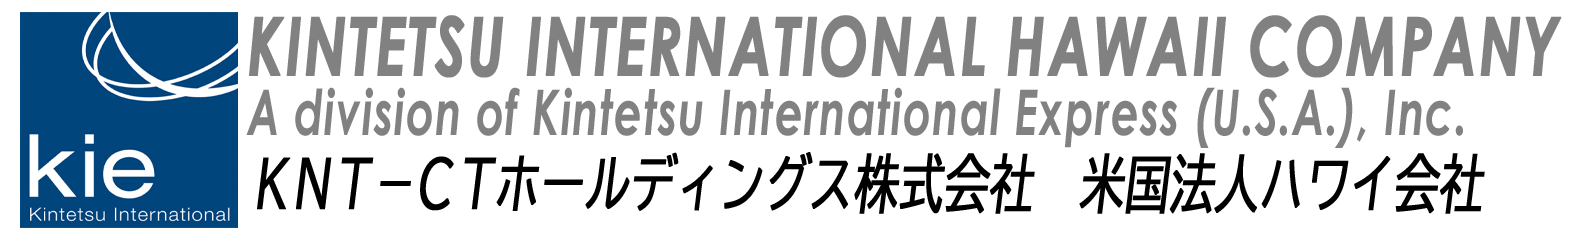 Kintetsu International Hawaii Company Global Services